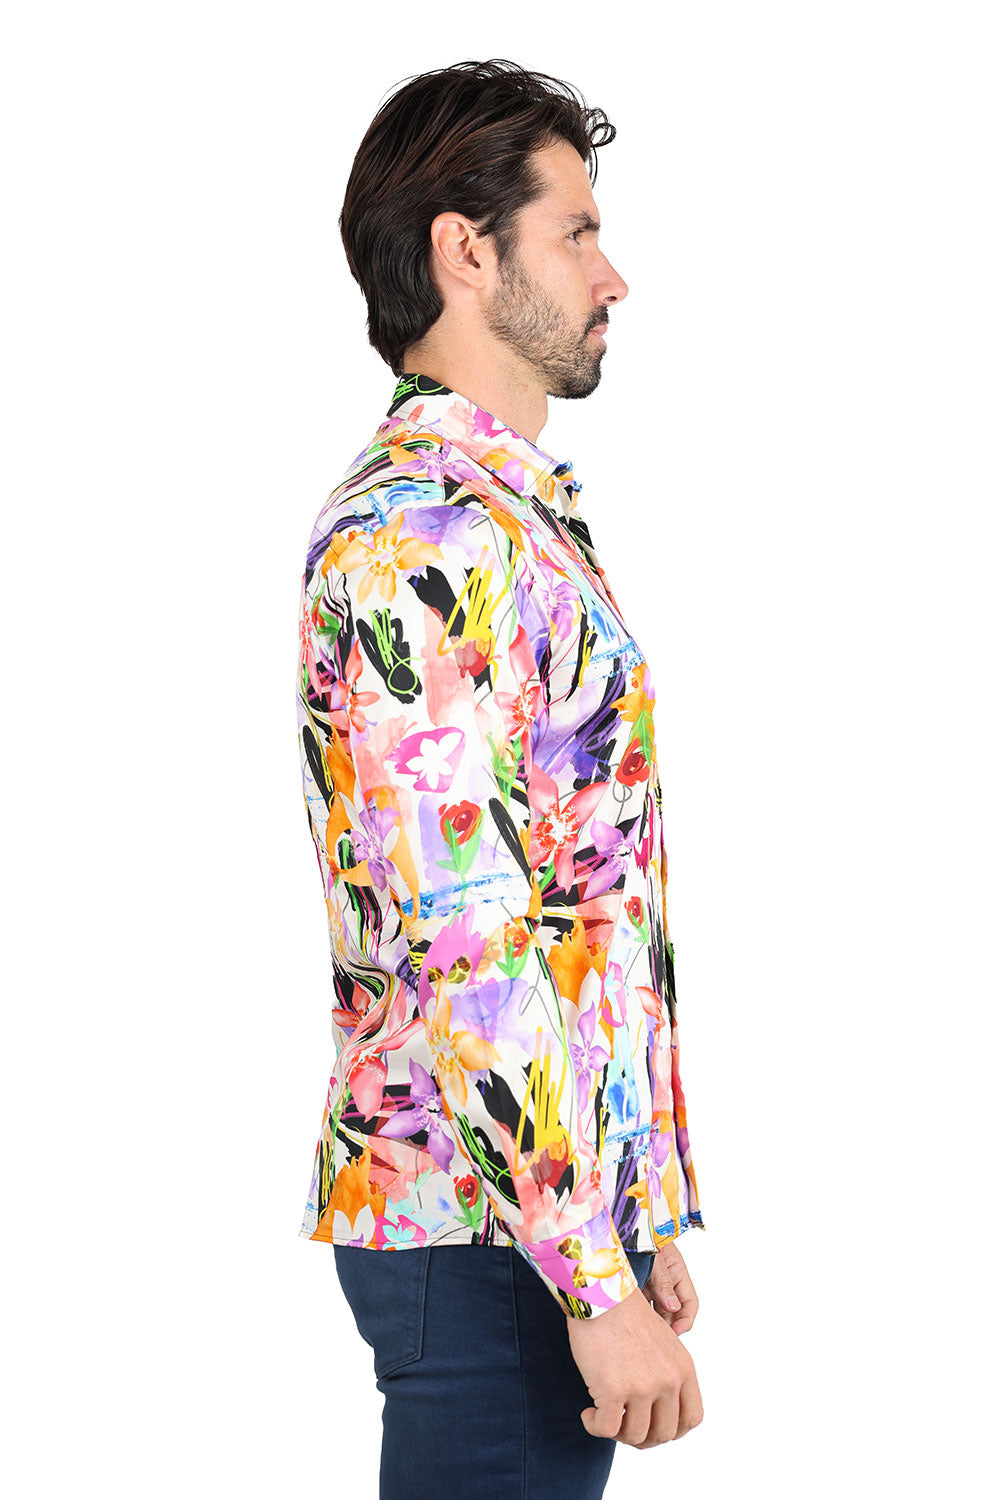 Barabas Long Sleeve Floral Lily Men's Button Down Dress Shirts 2SA04 Multi